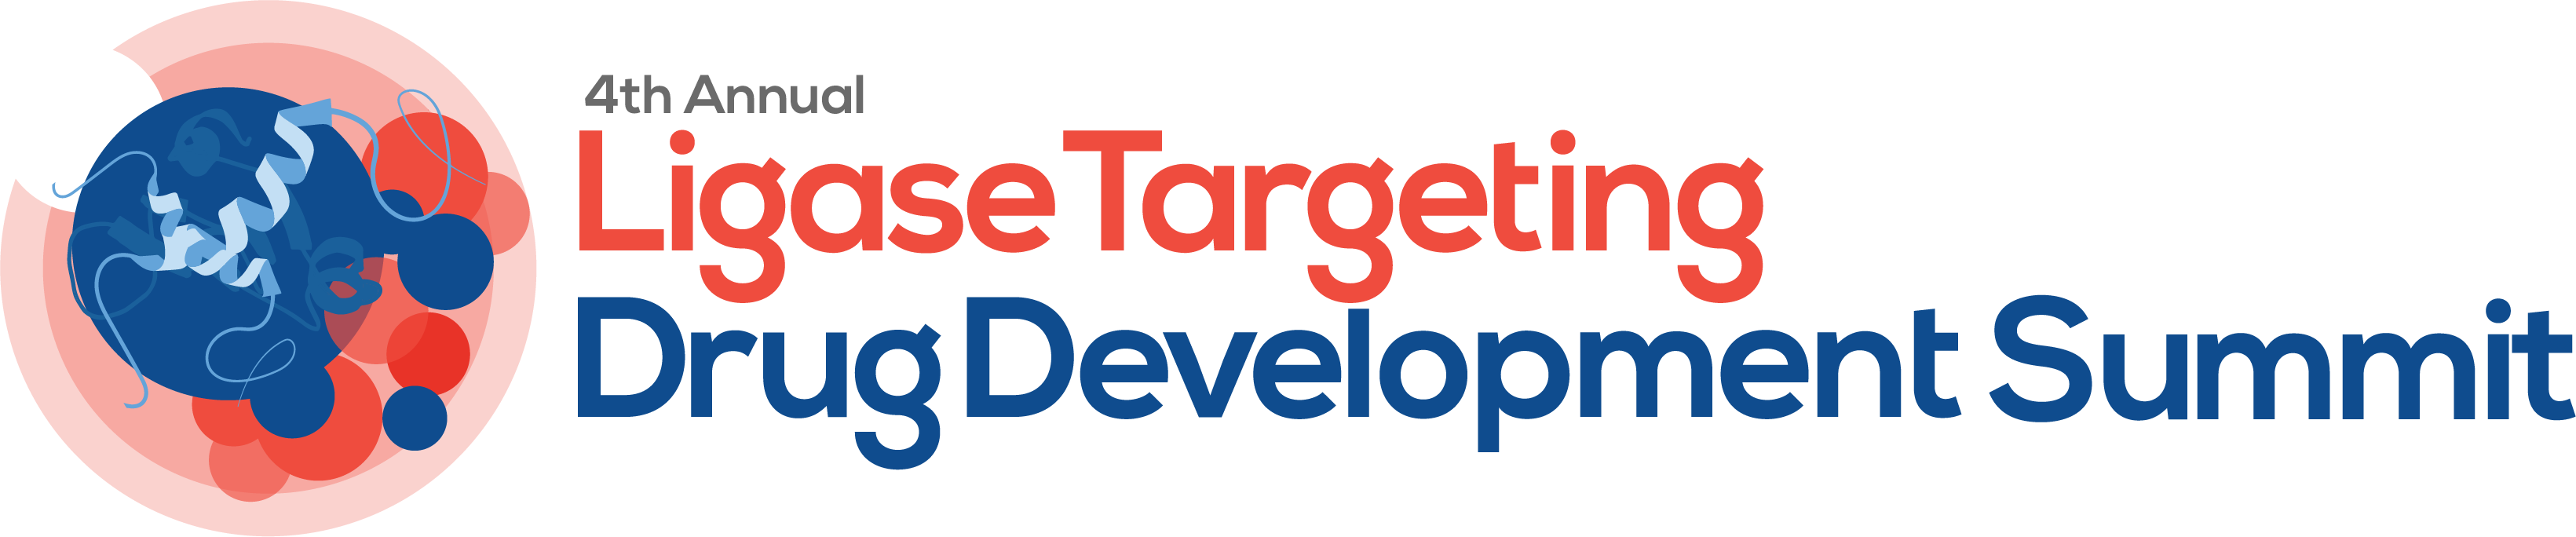 Ligase Targeting Drug Development Summit